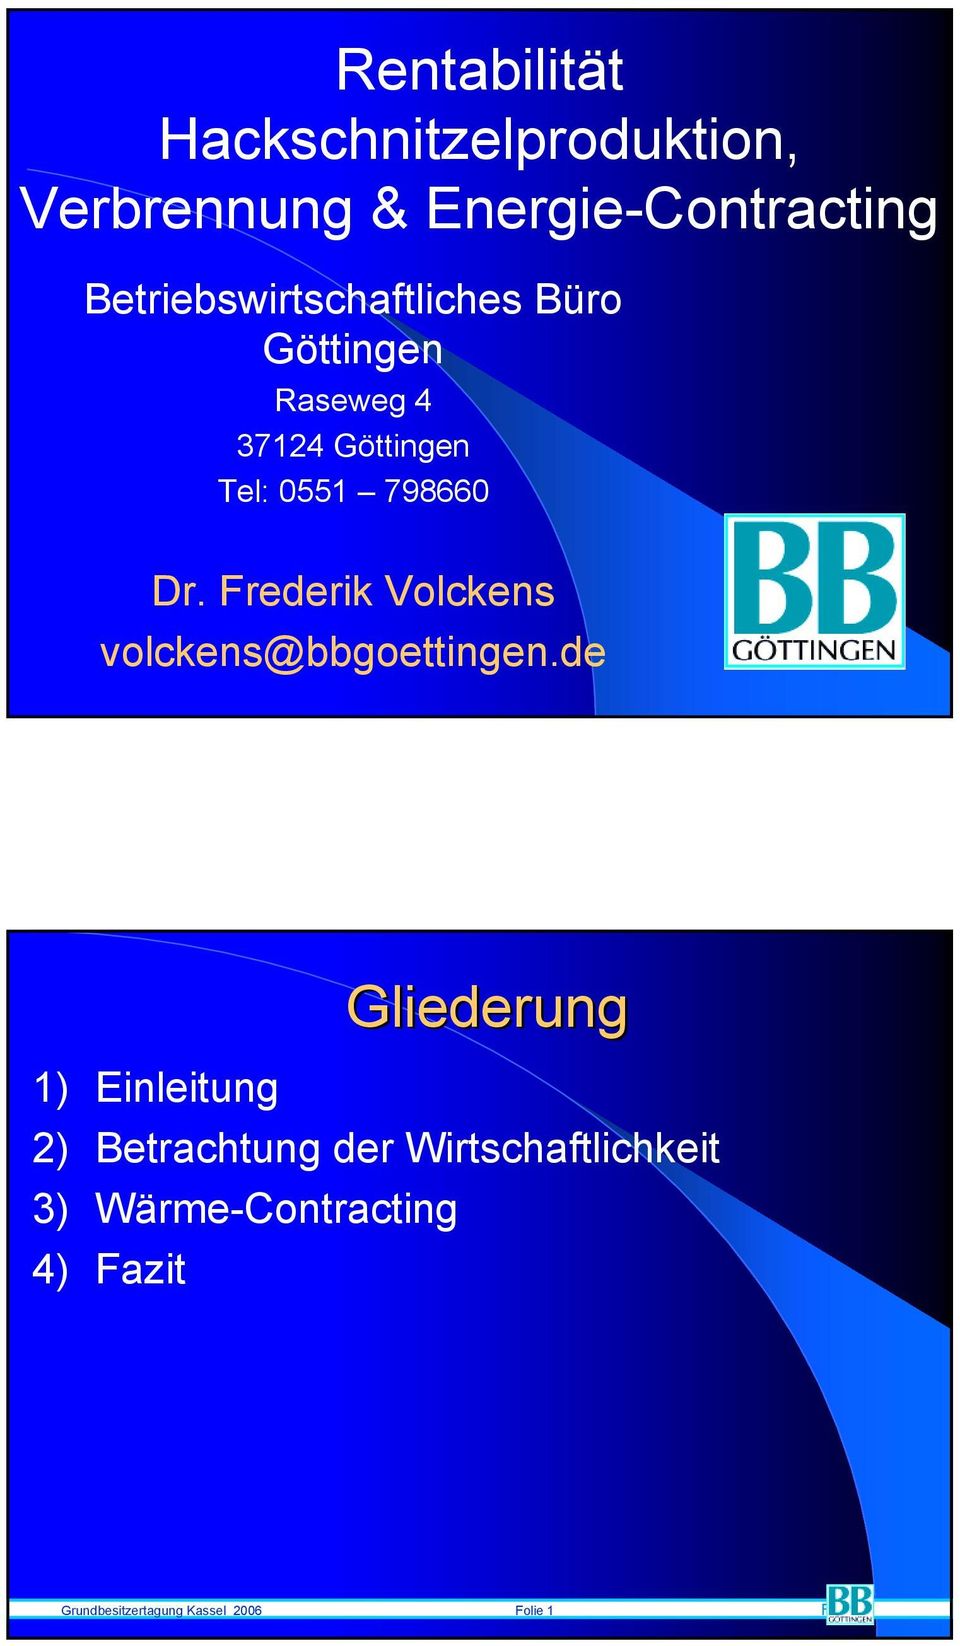 Dr. Frederik Volckens volckens@bbgoettingen.